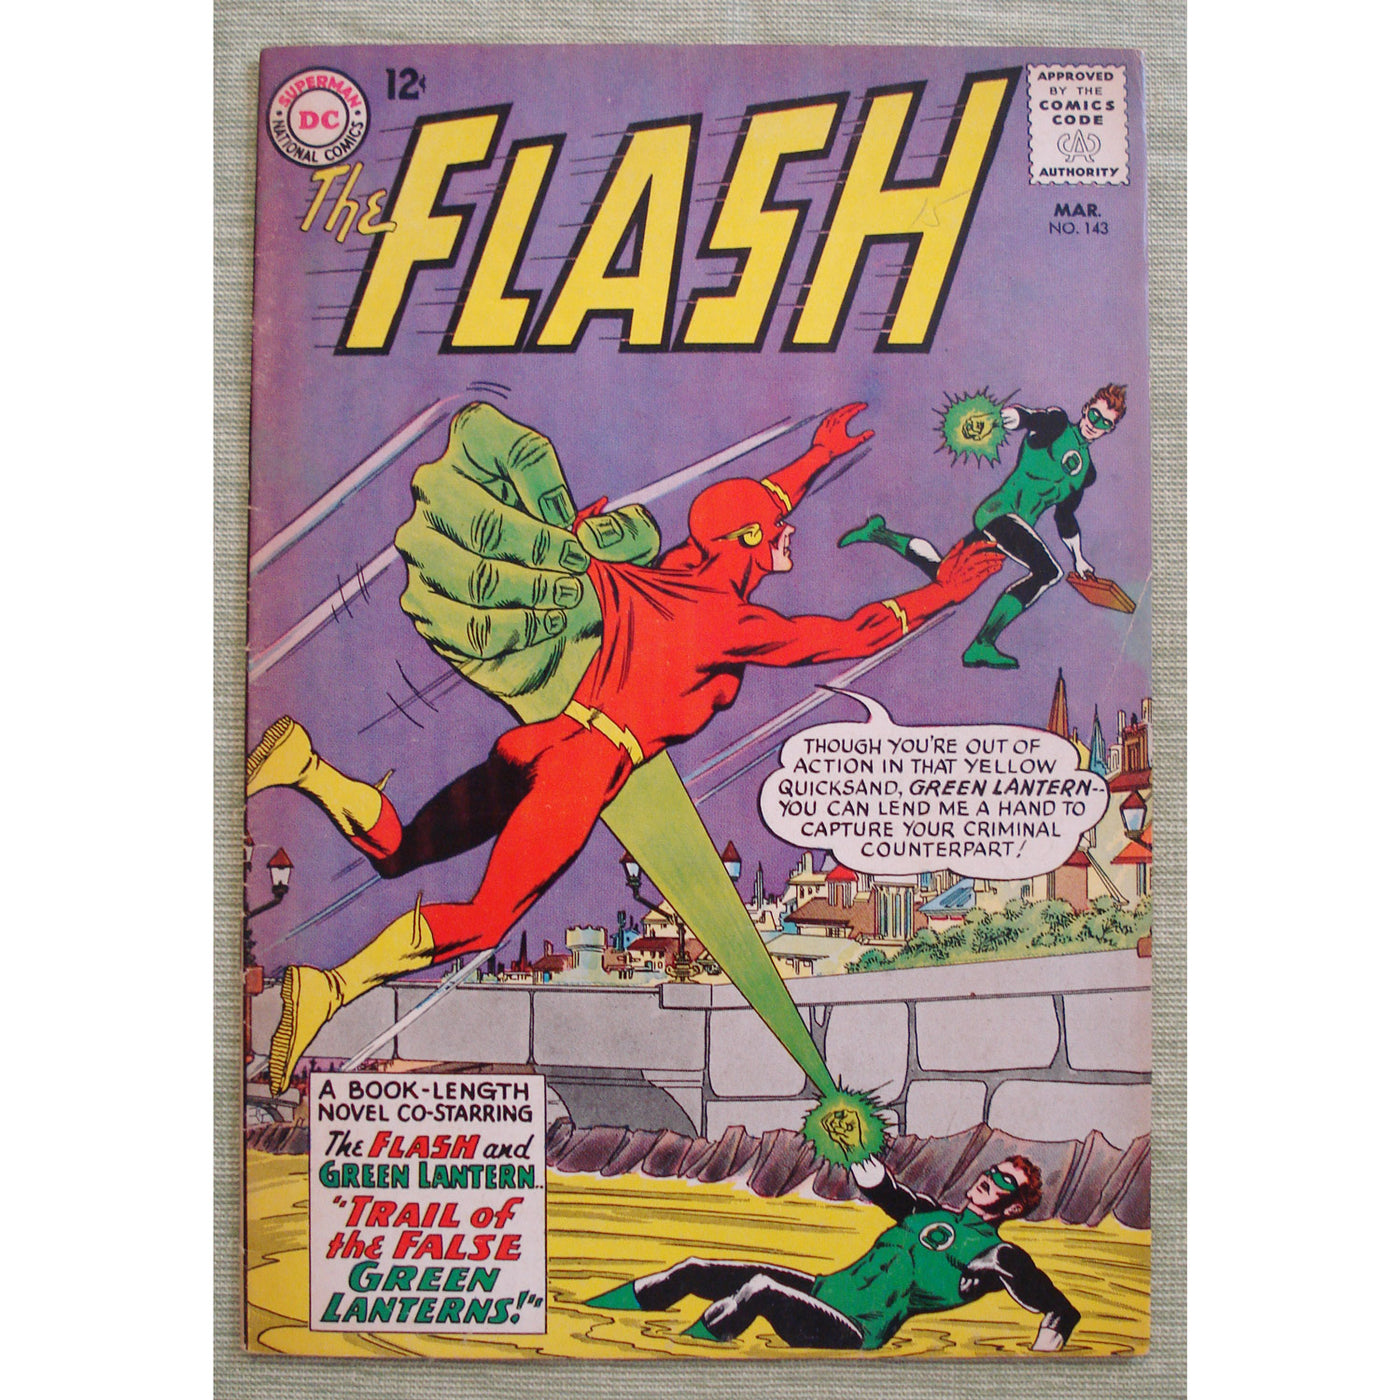 The Flash 143 - DC Comics March 1964